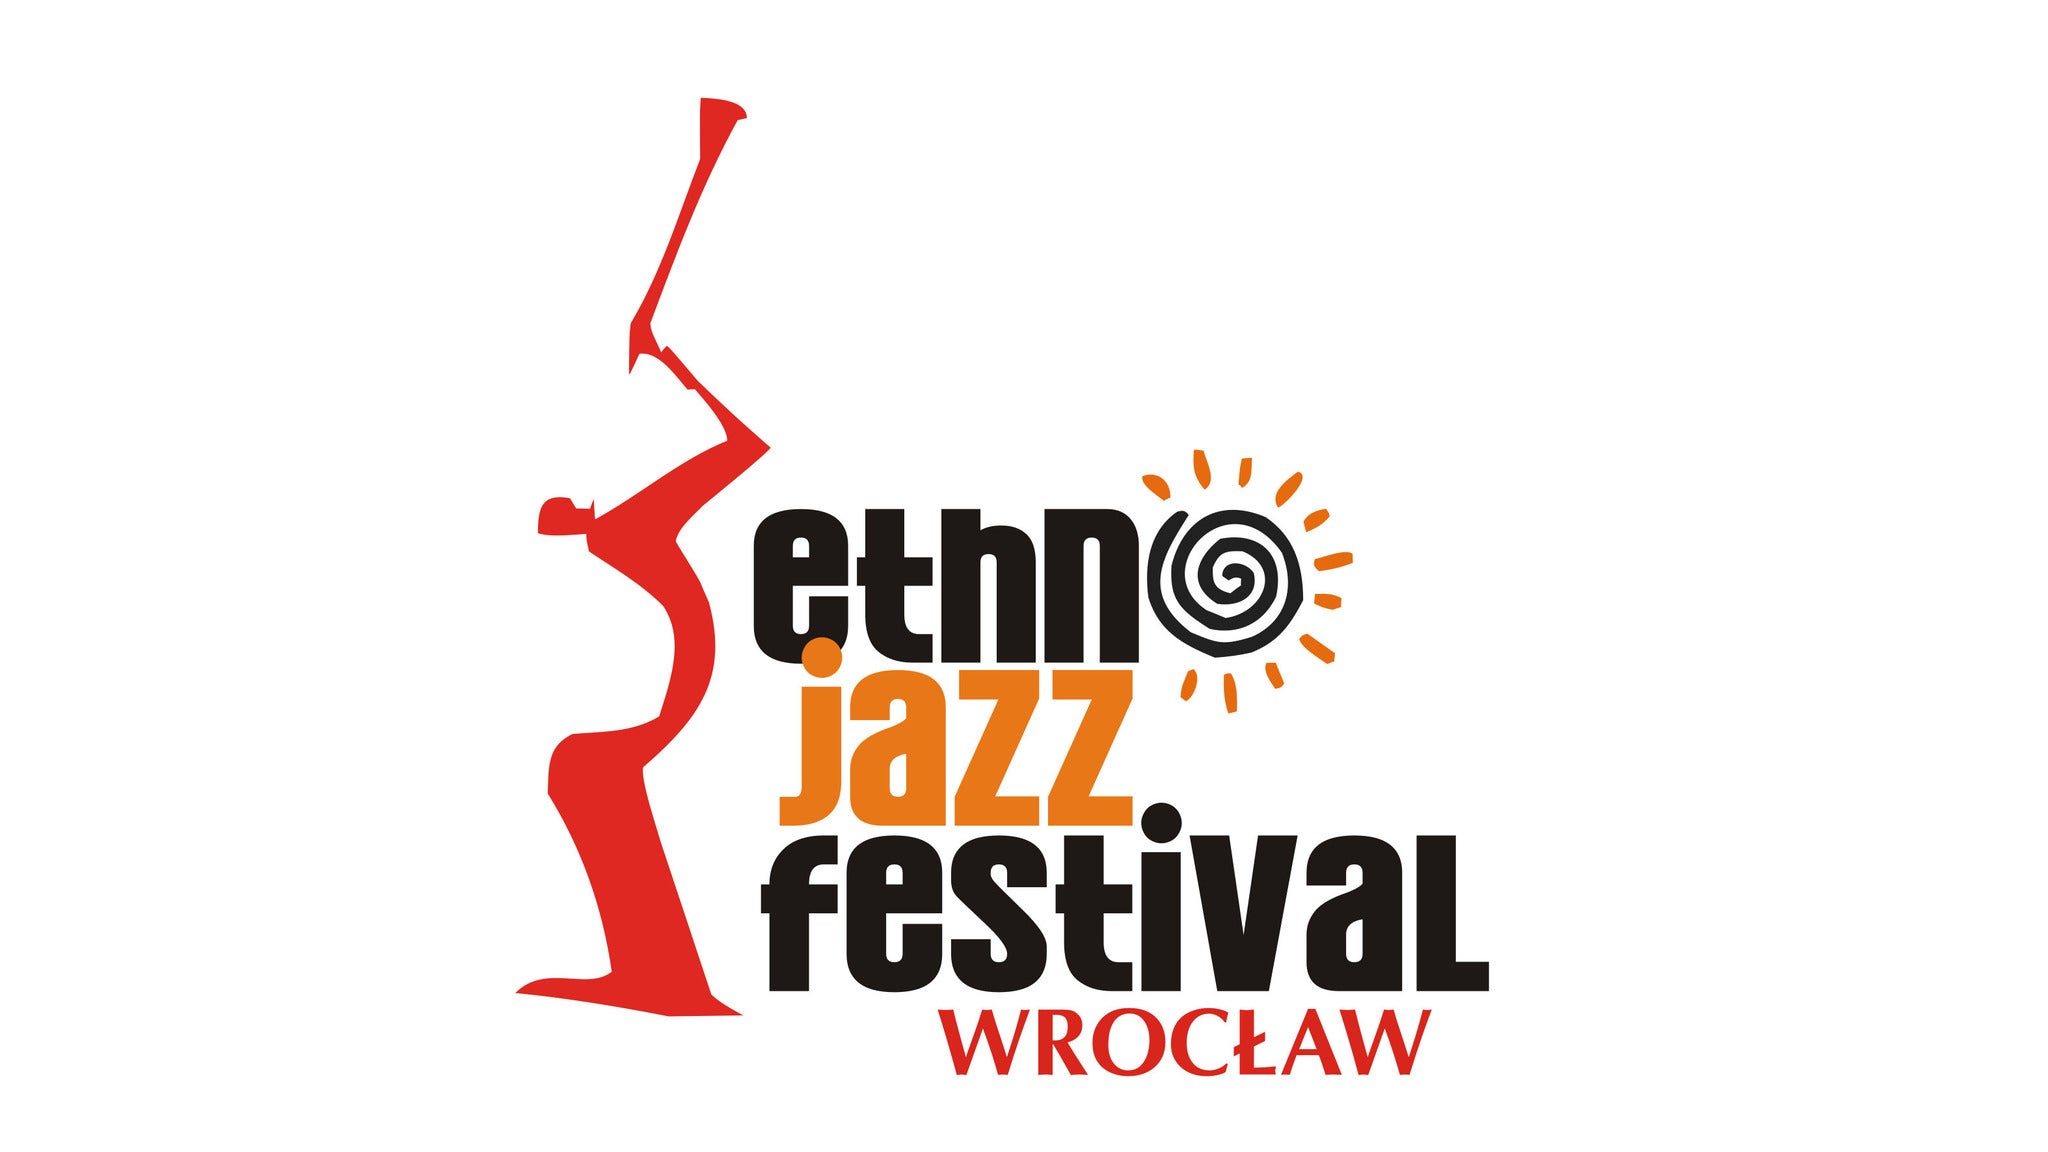 Ethno Jazz Festival presale information on freepresalepasswords.com